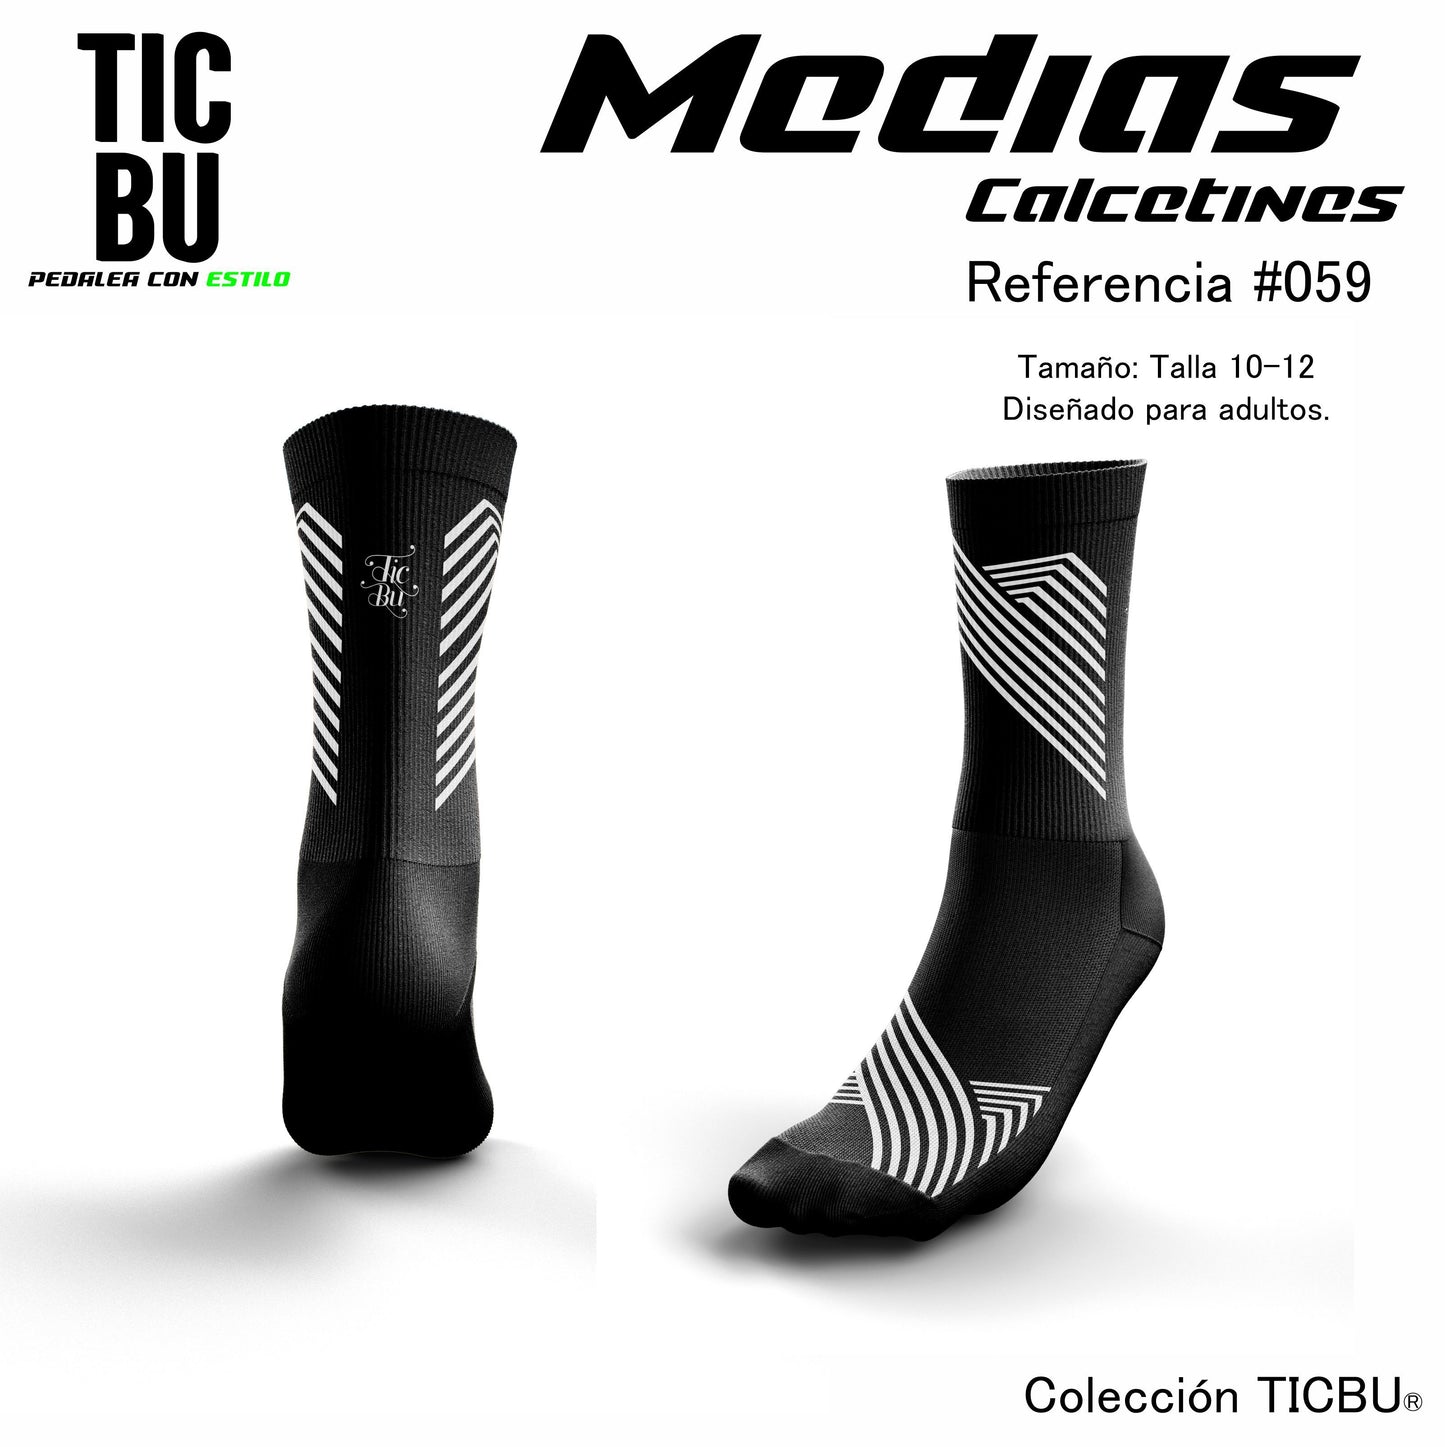 TICBU socks Ref 059